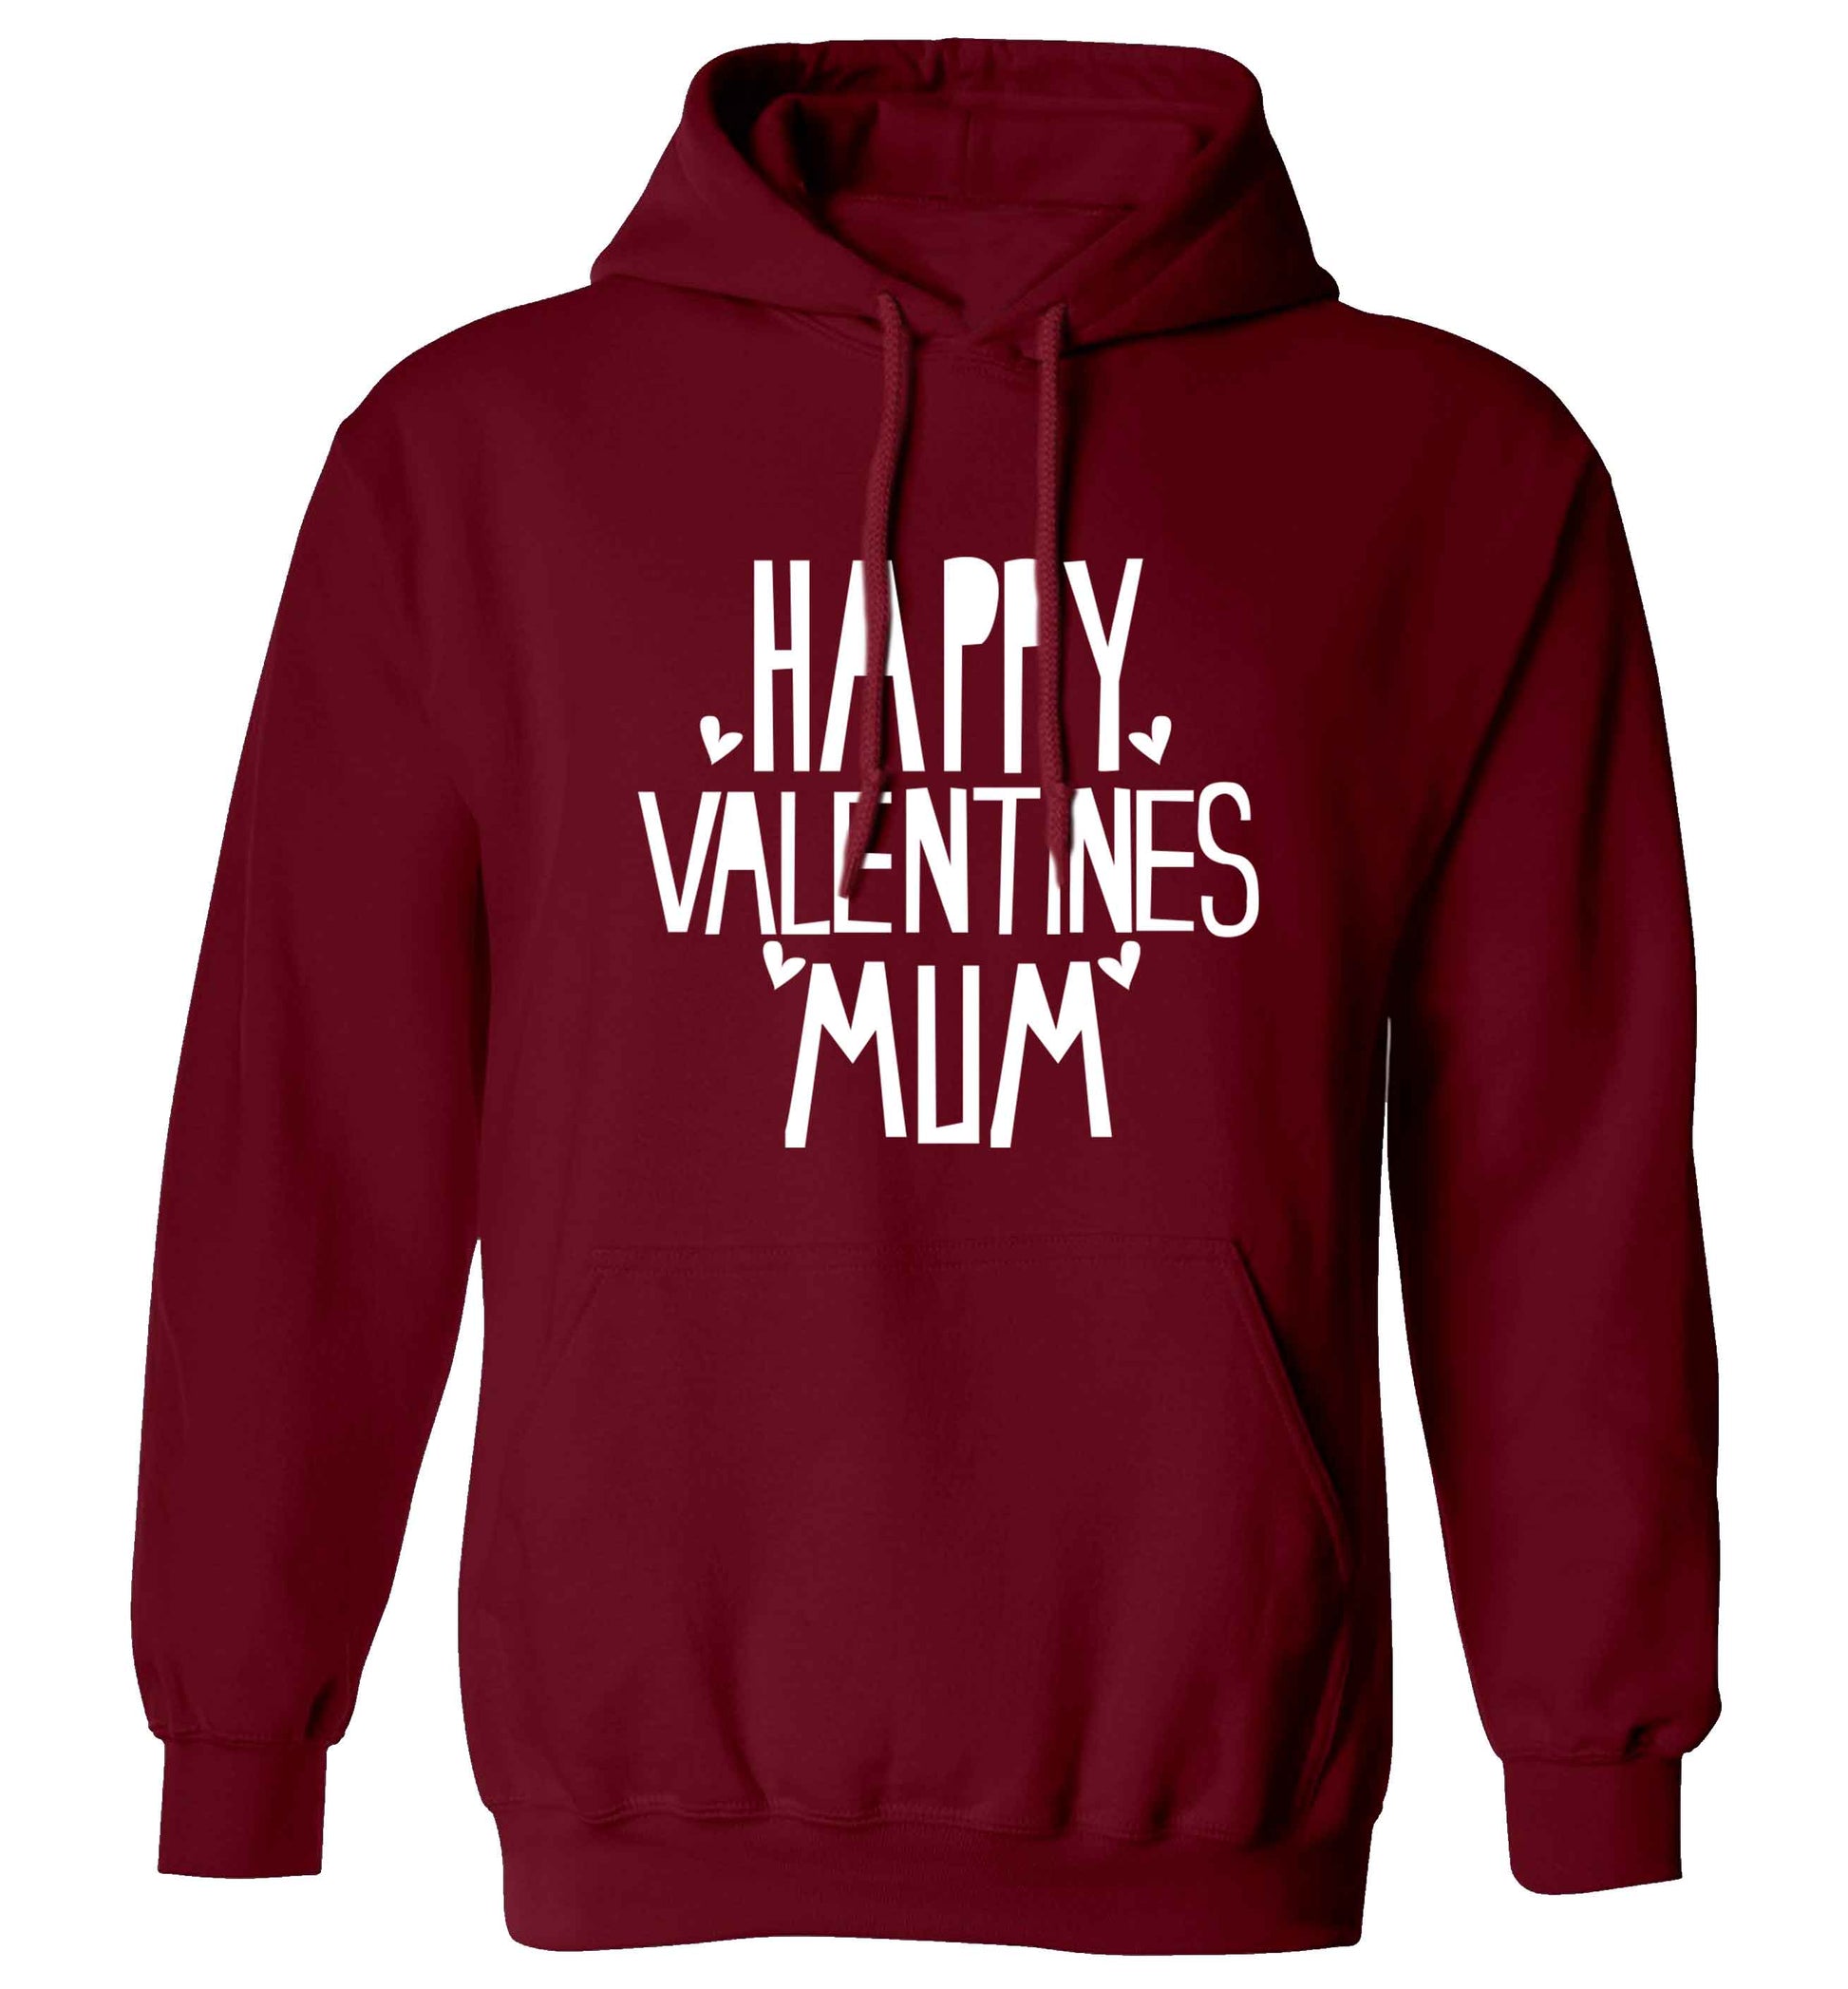 Happy valentines mum adults unisex maroon hoodie 2XL